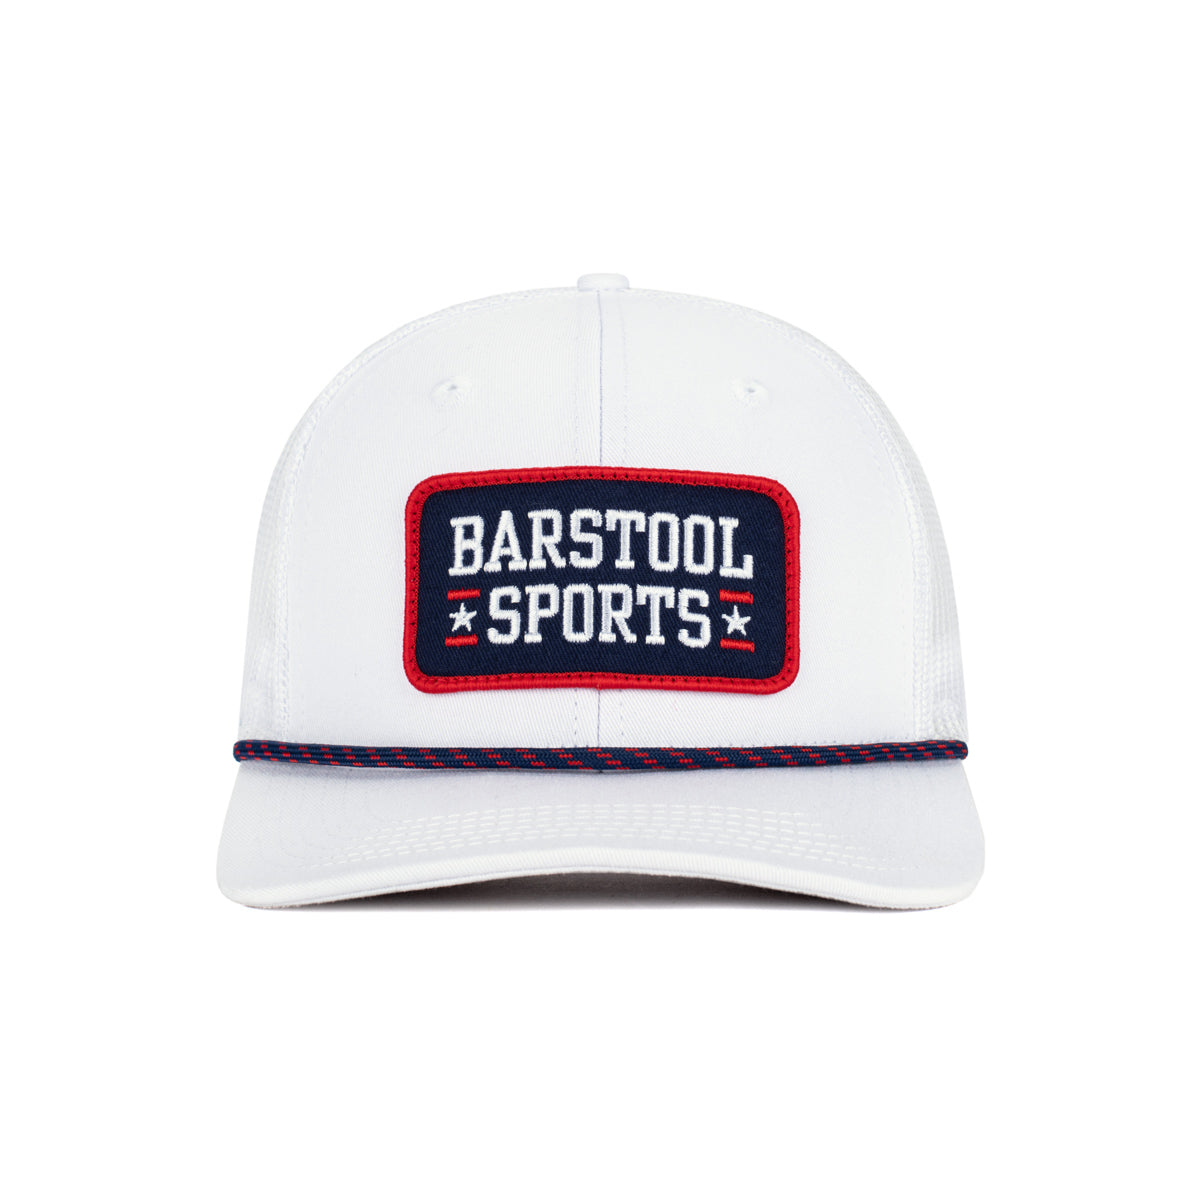 Barstool Sports Patch Trucker Hat-Hats-Barstool Sports-White-One Size-Barstool Sports